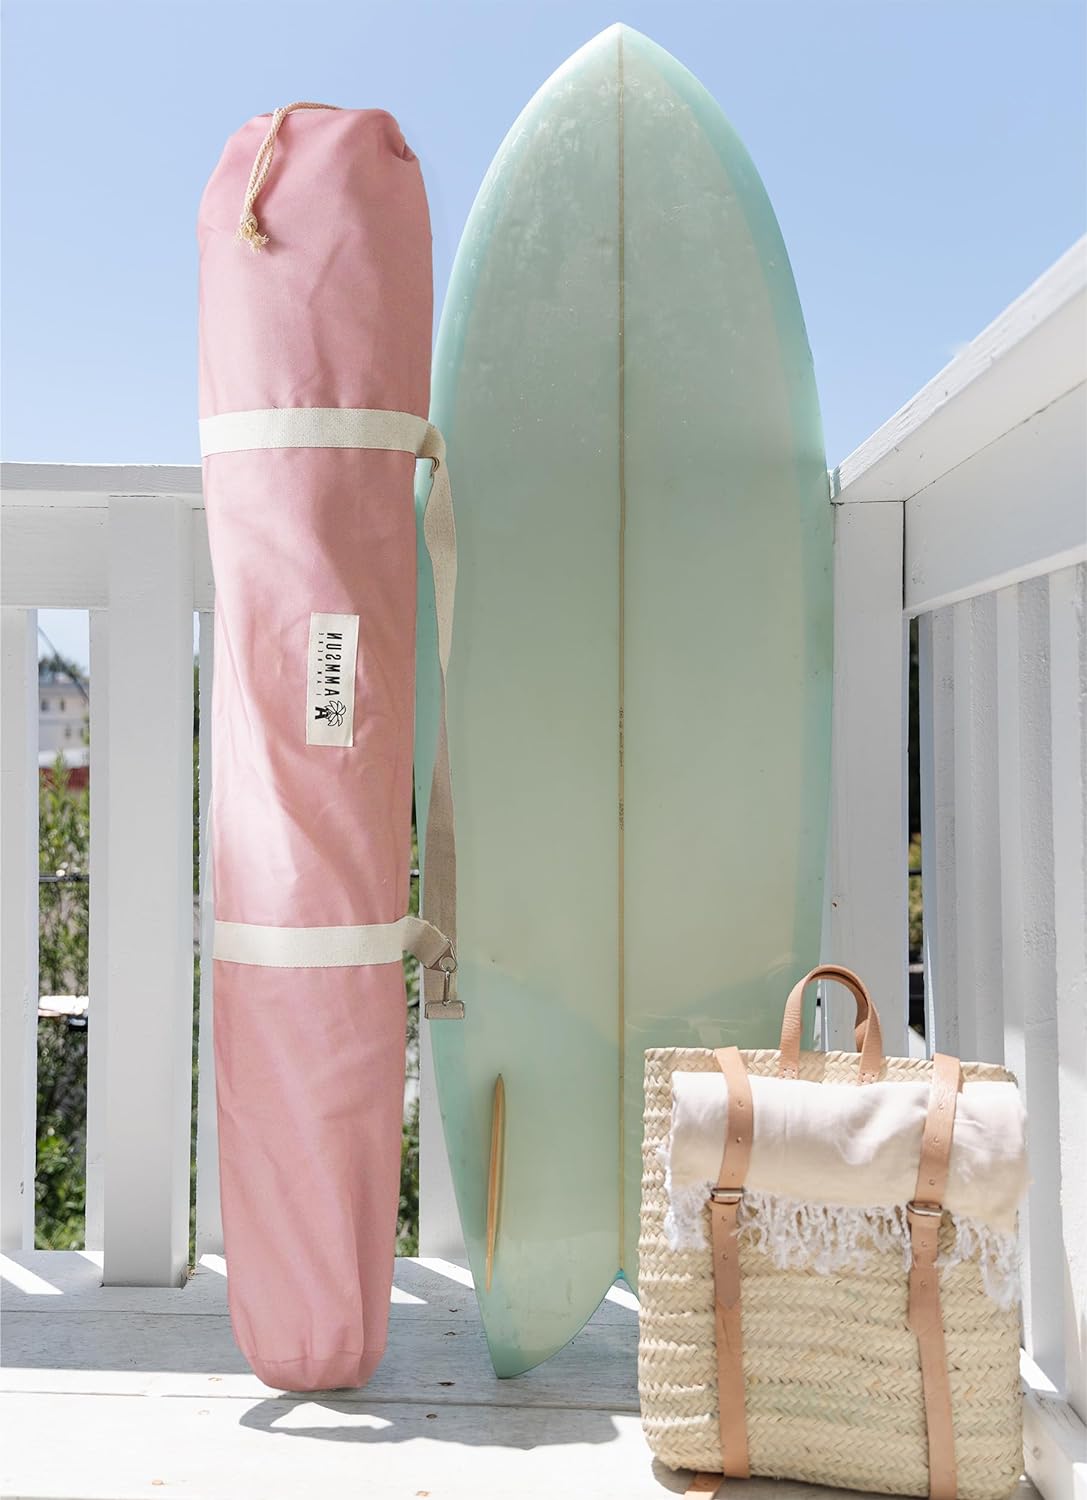 AMMSUN 6'×6' Bobo Beach Cabana with Fringe Gentle Pink